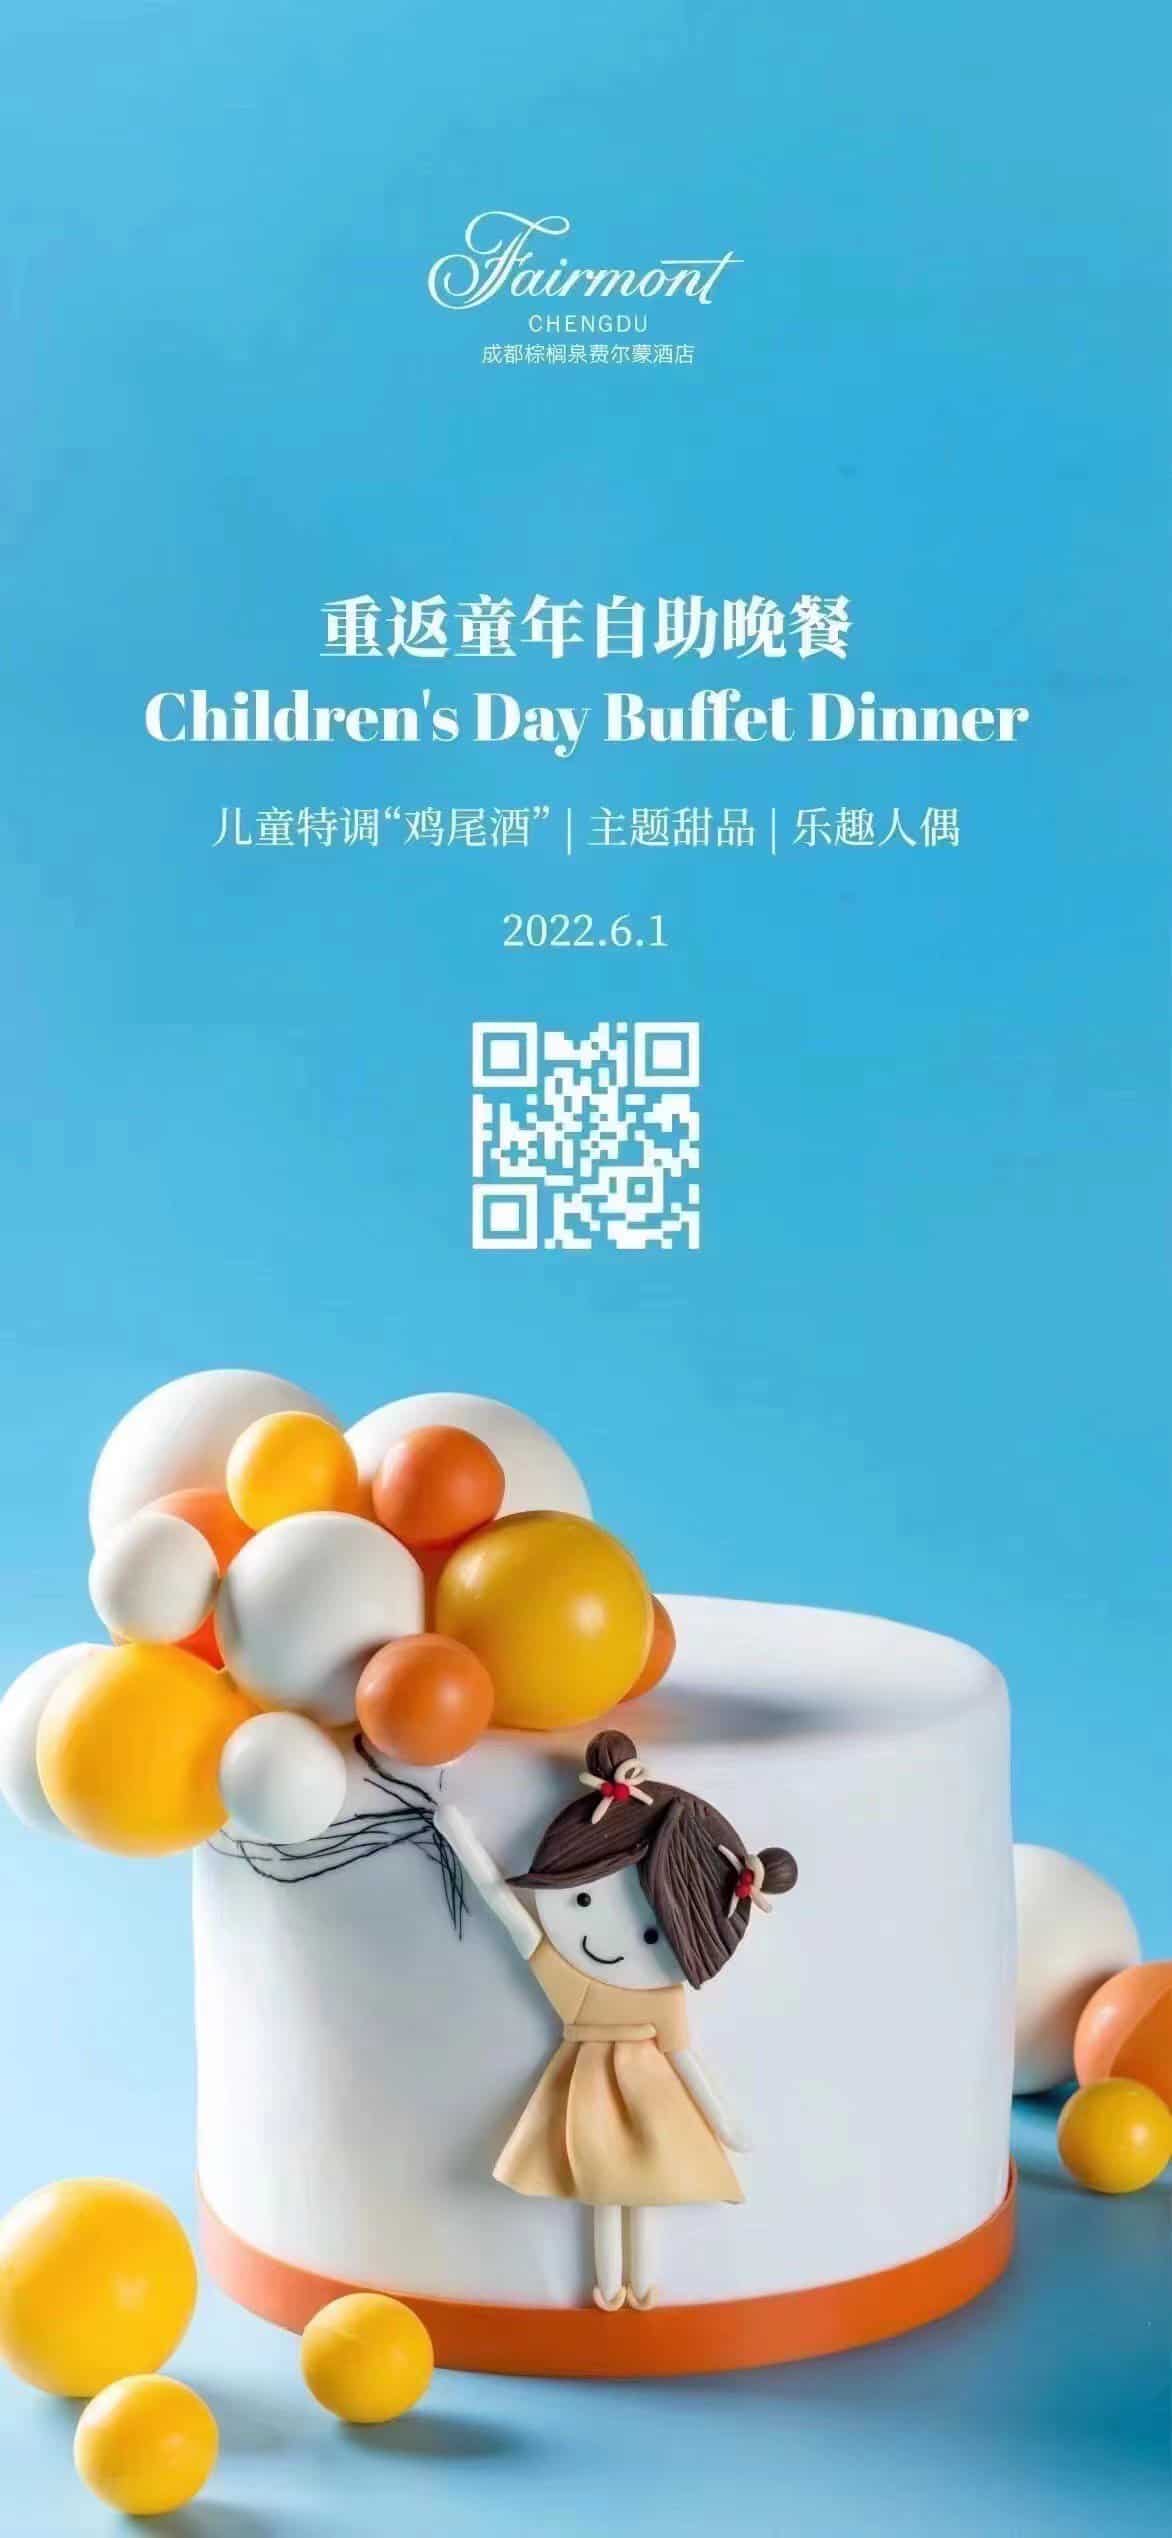 Fairmont Childrens Day Dinner Buffet chengdu expat